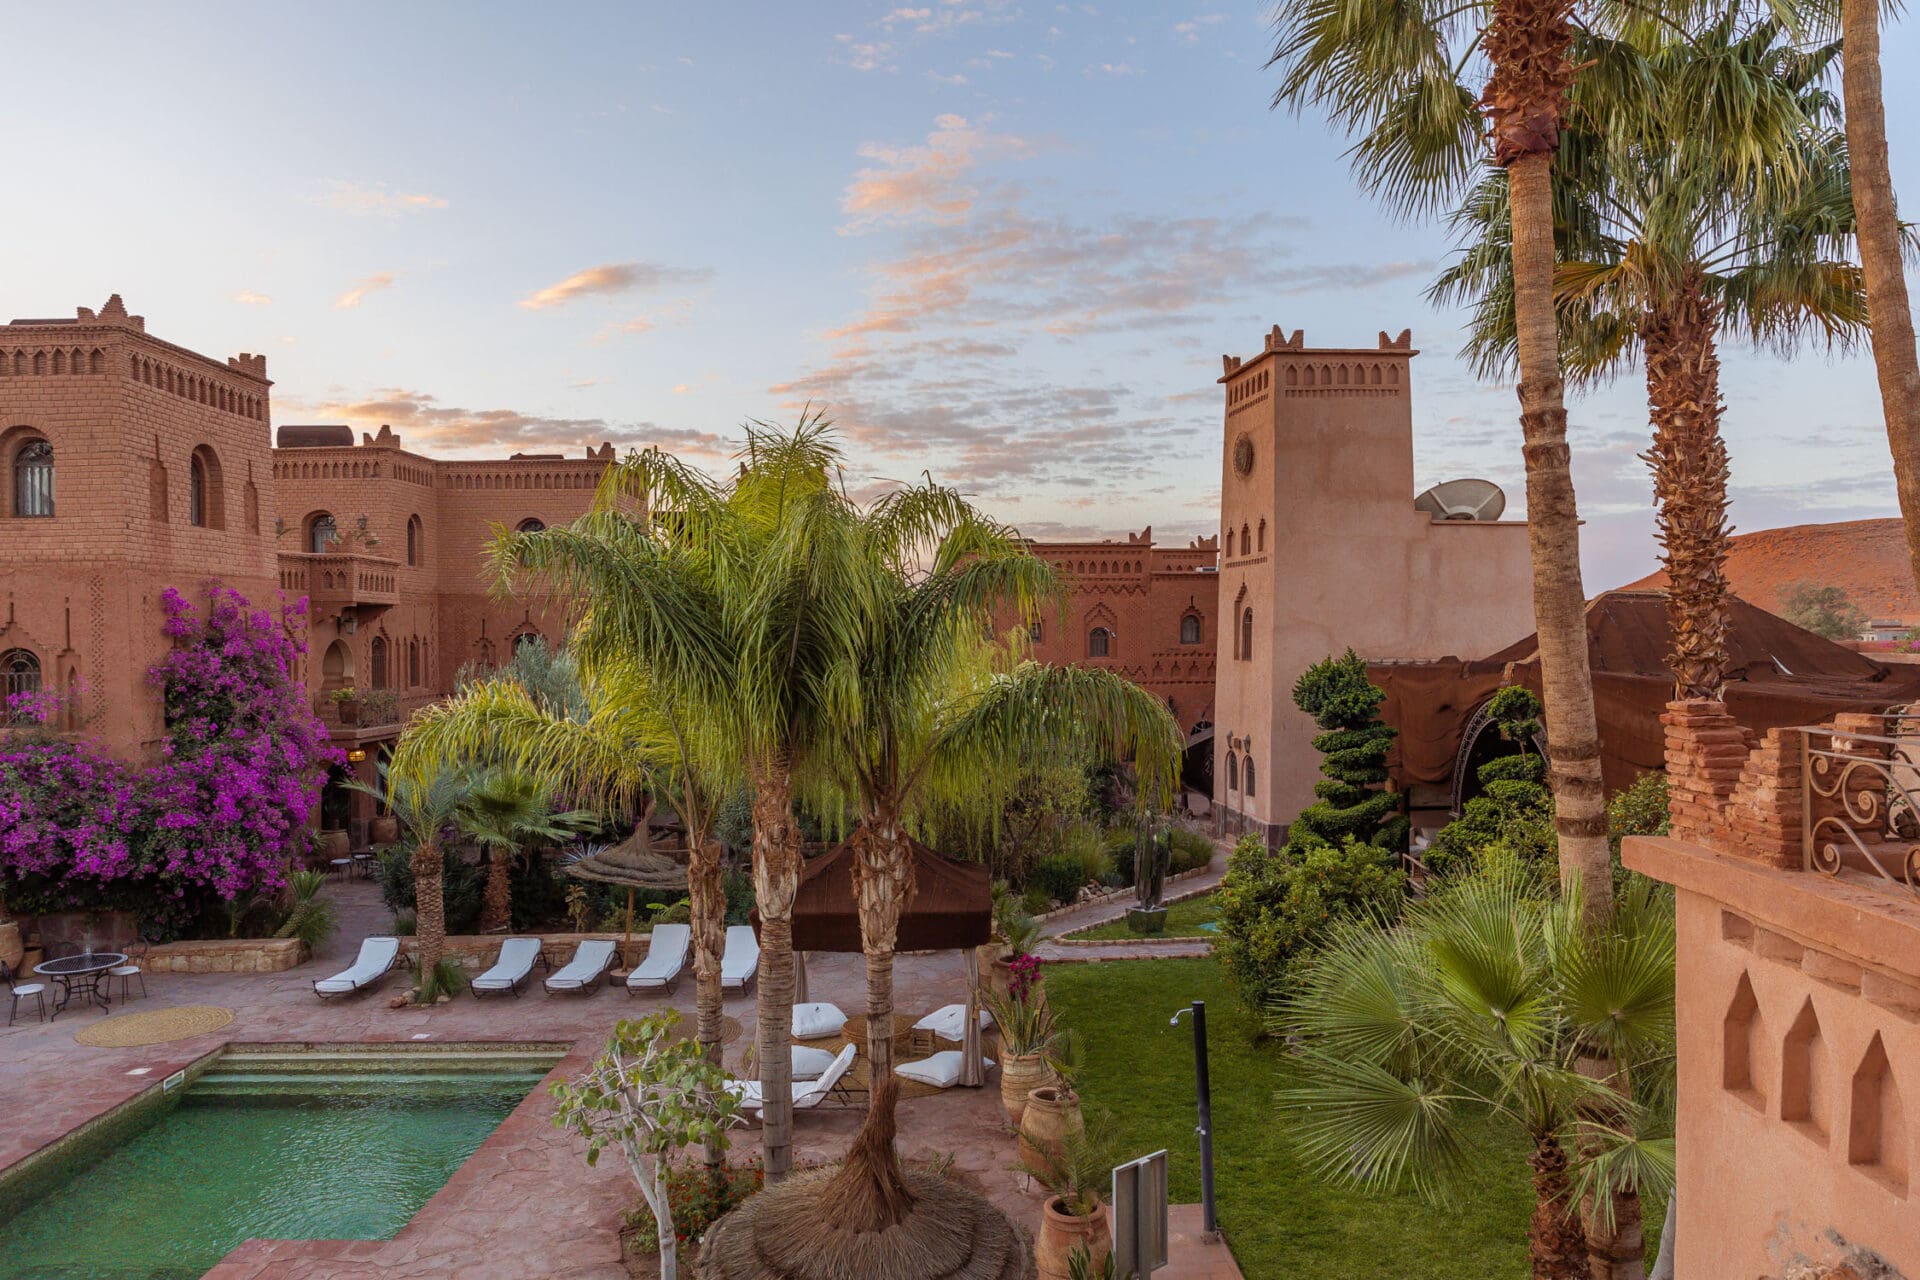 Hotel Riad Ksar Ighnda; beautiful hotel near Ait Ben Haddou in Morocco